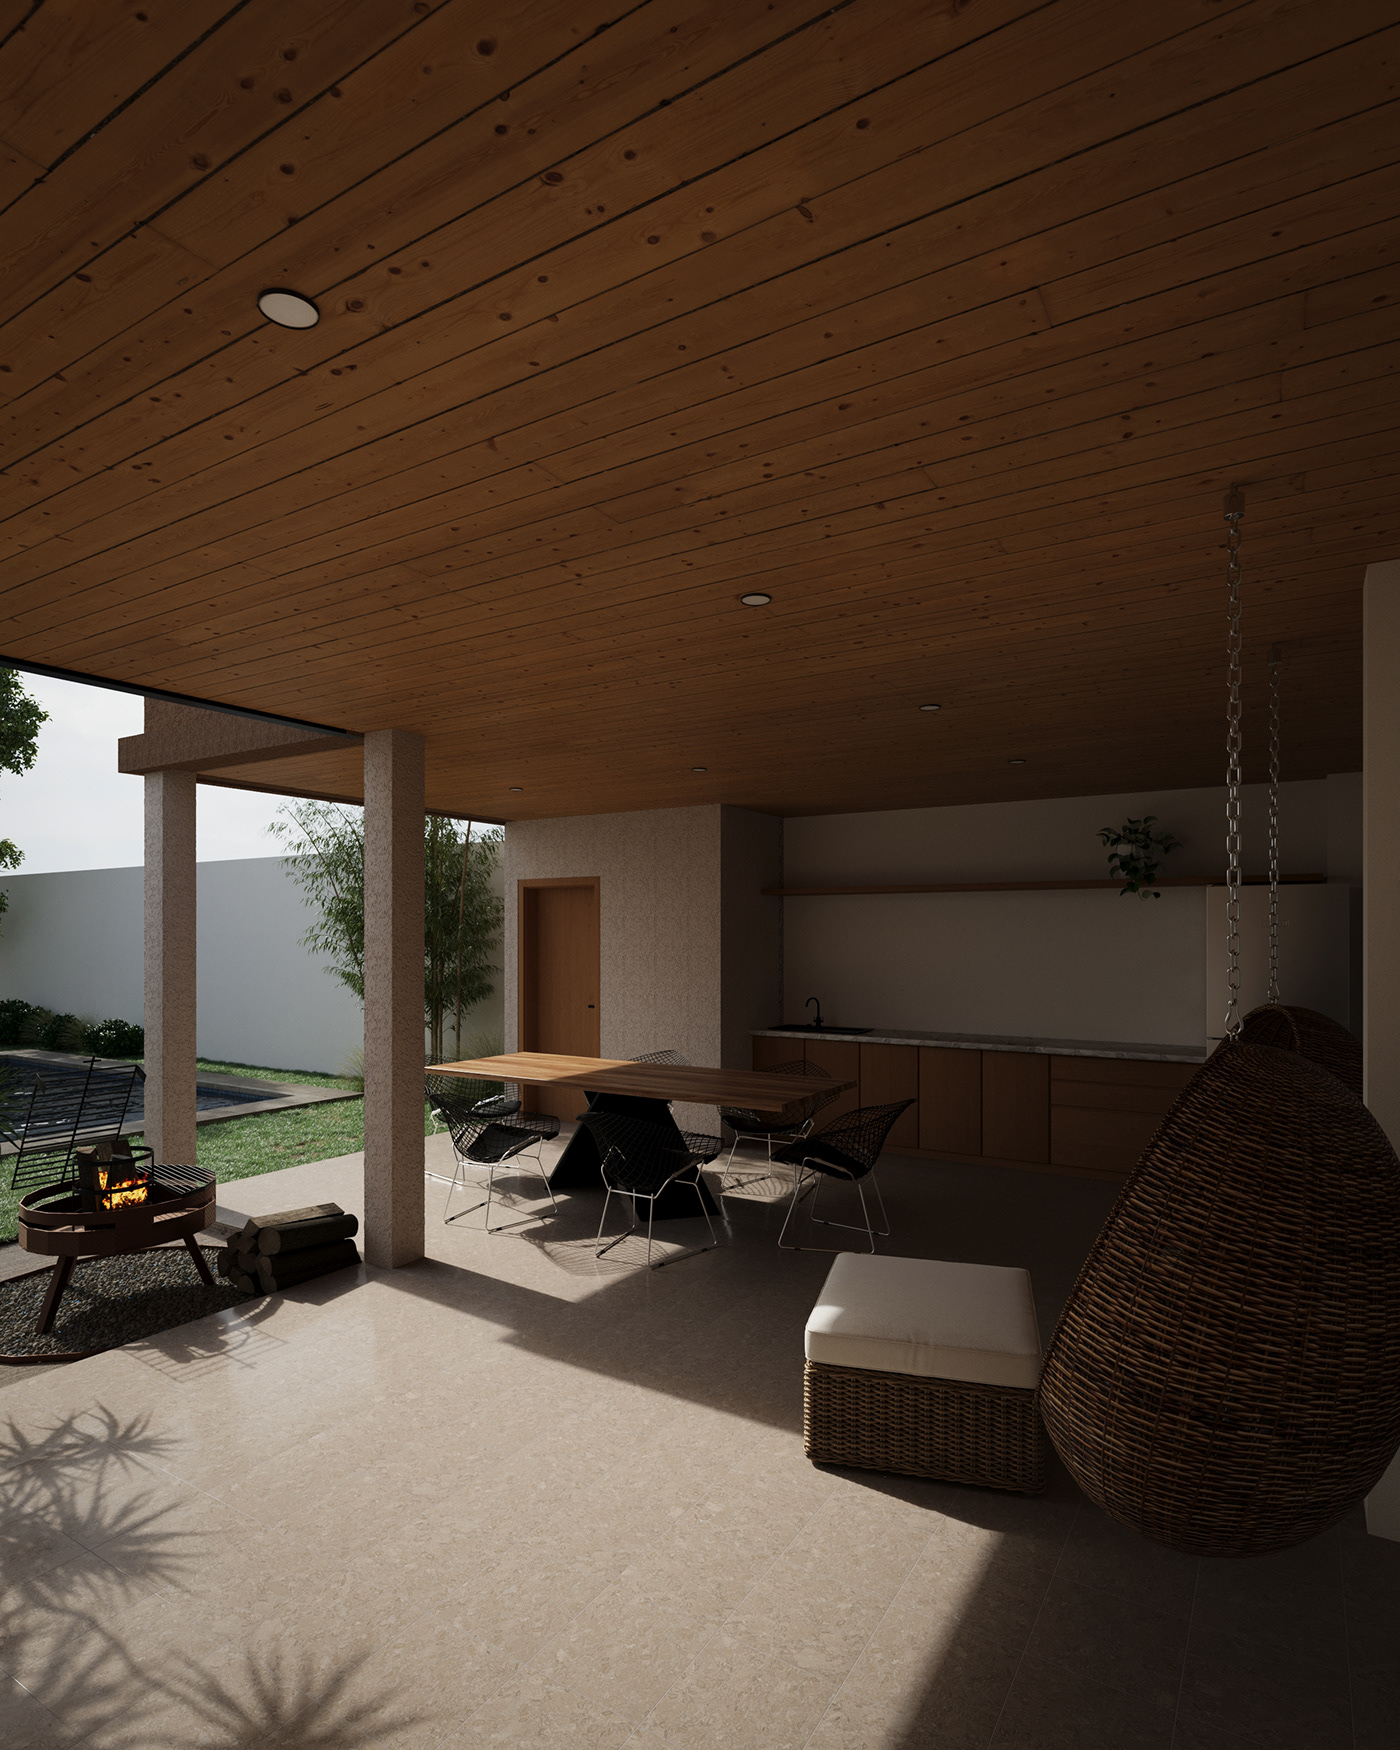 archviz architecture Render CGI visualization 3ds max corona render  corona renderer interior design  architecturalrendering